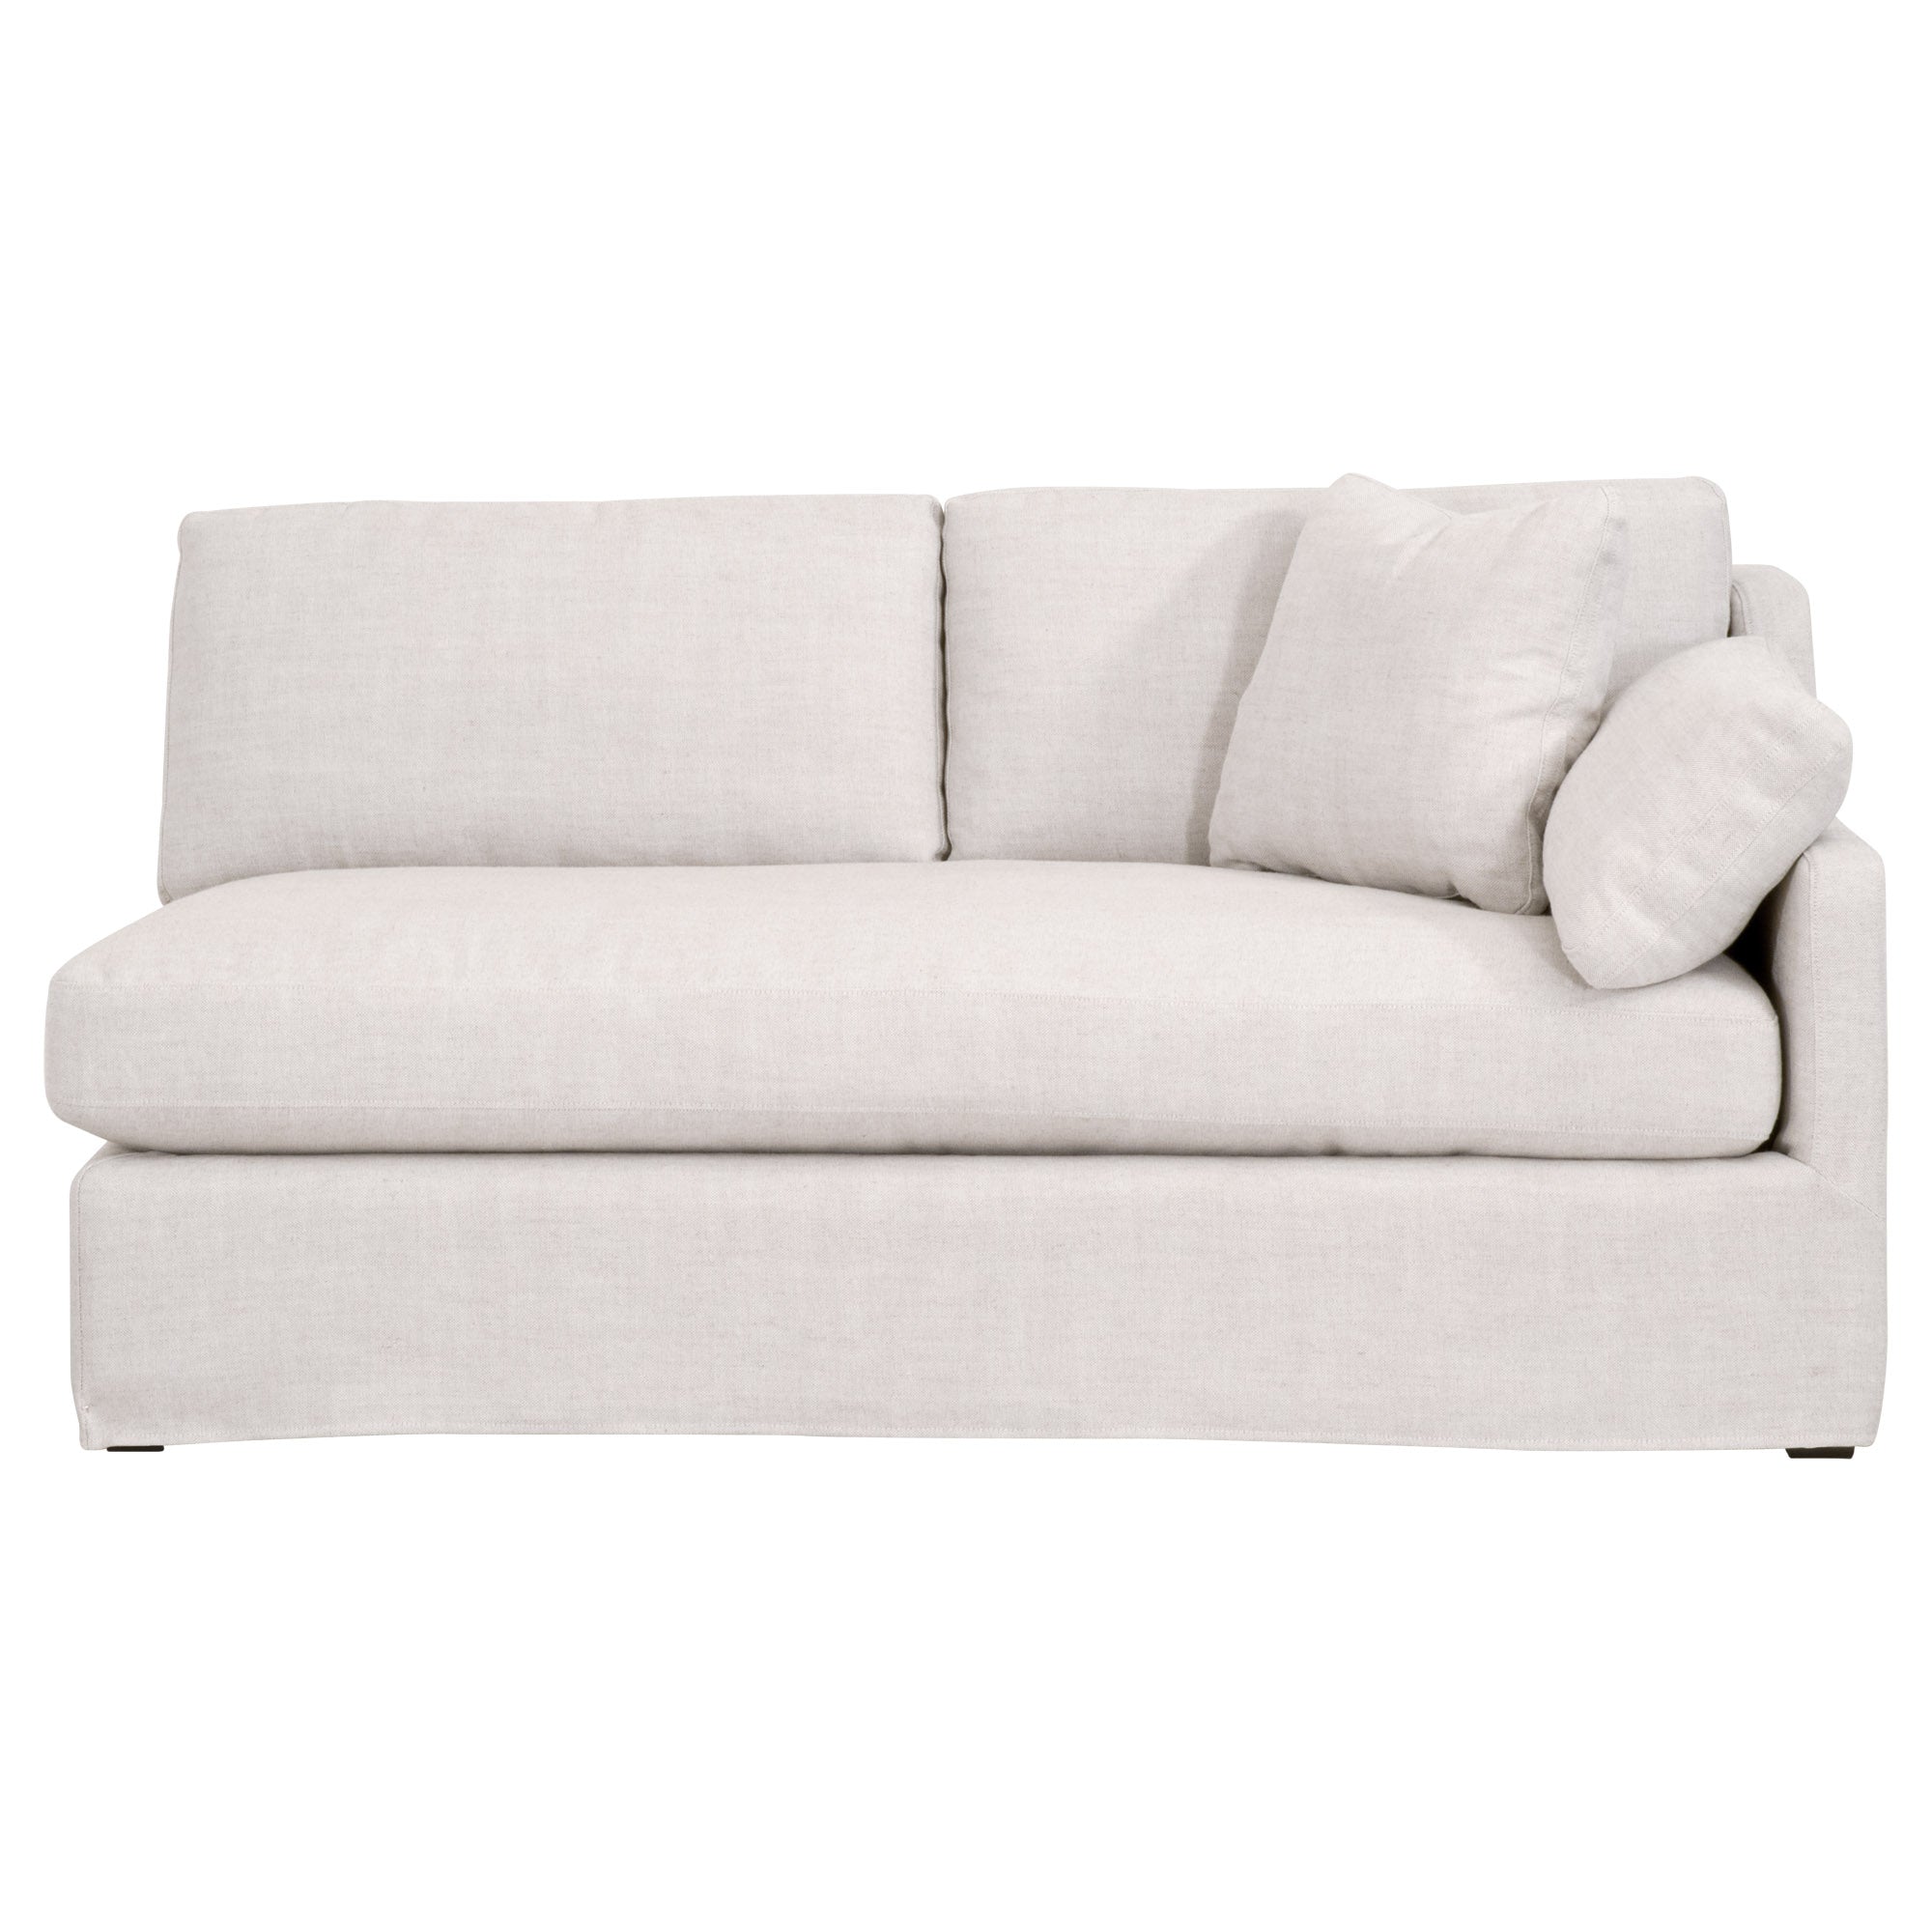 Dorset Modular Slope Arm Slipcover 2-Seat Sofa